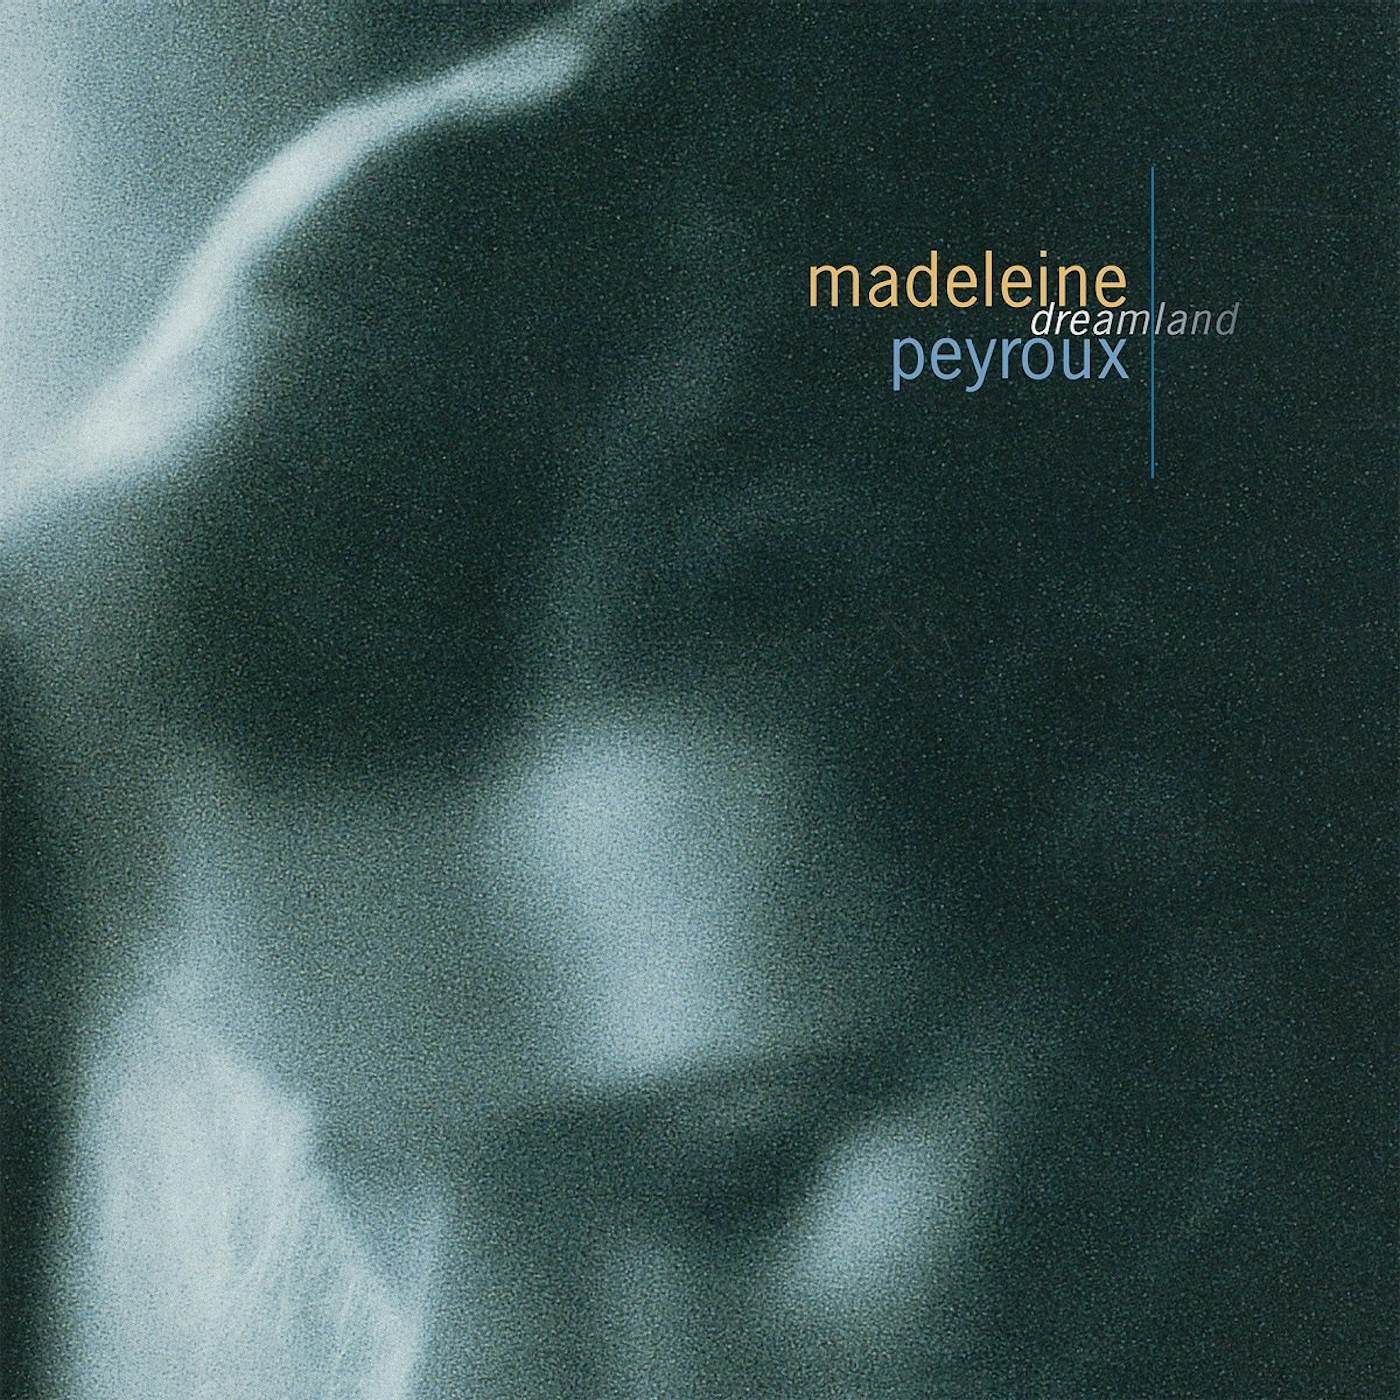 Madeleine Peyroux Dreamland Vinyl Record